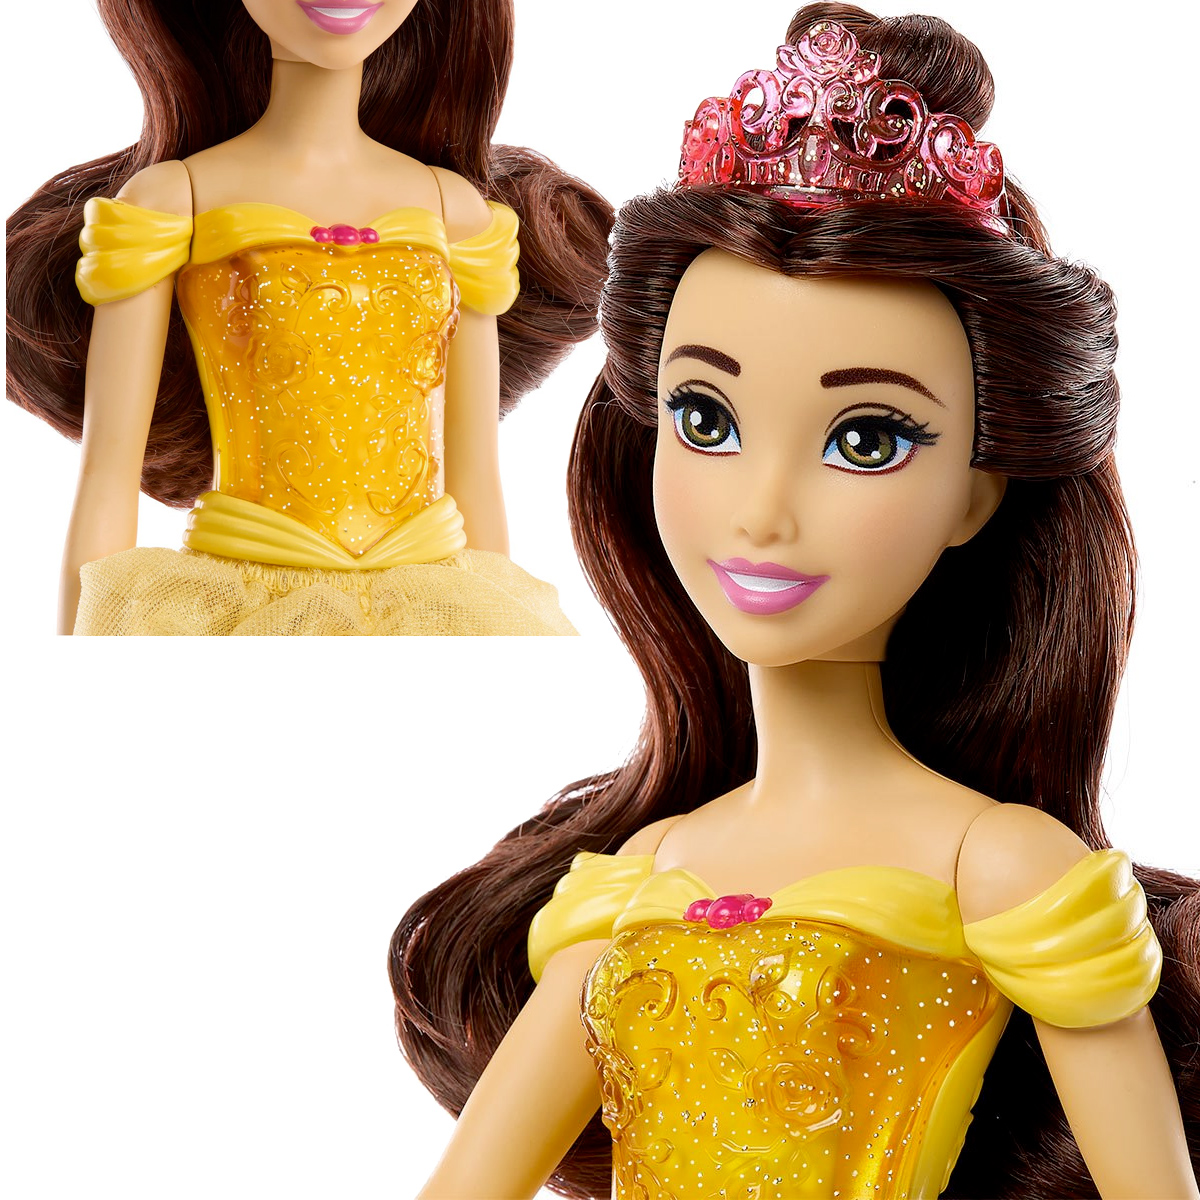 Disney Princess Mattel 11-inches Fashion Dolls